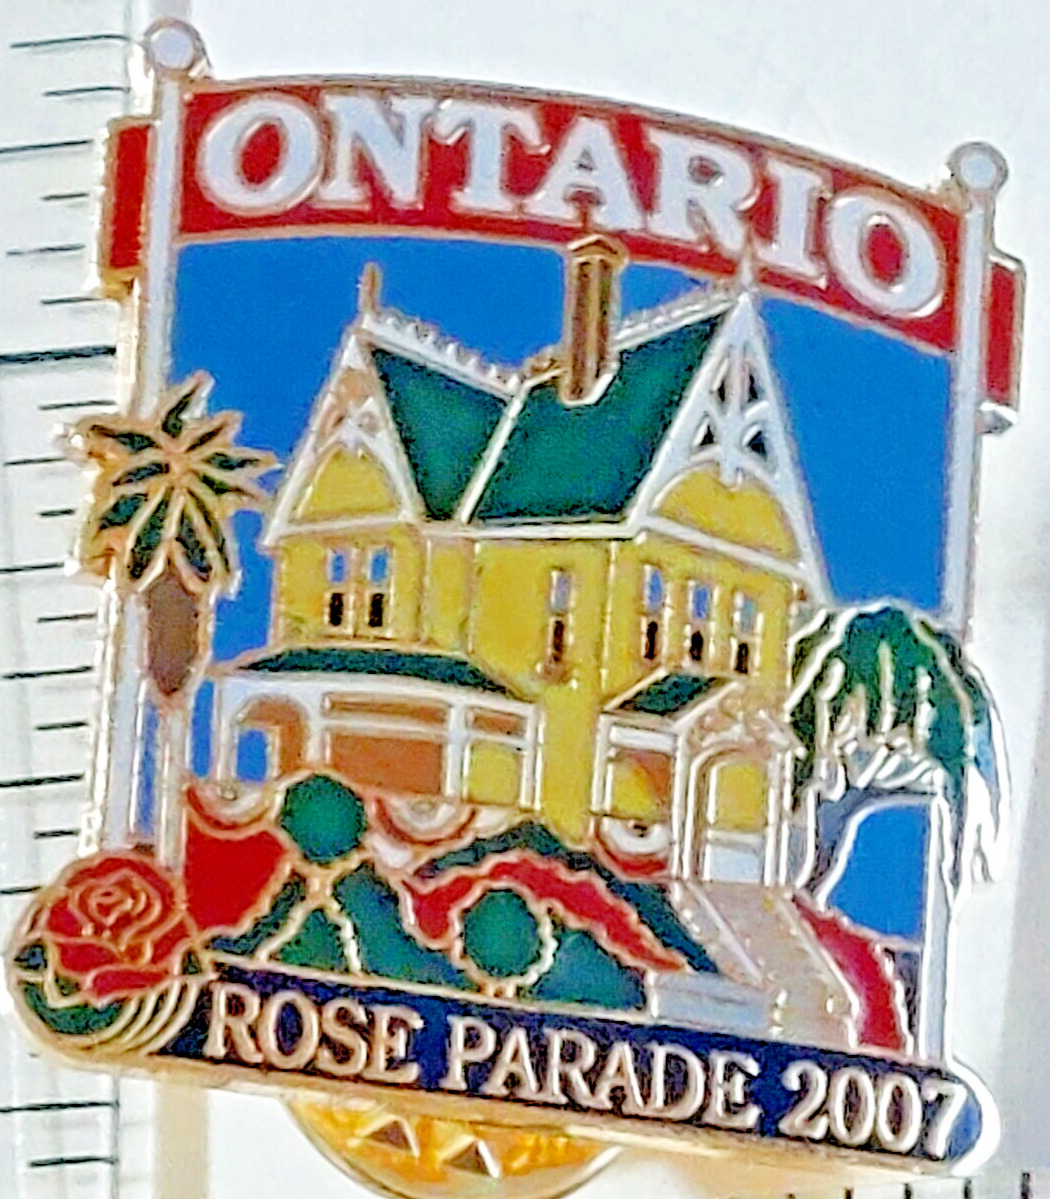 Rose Parade 2007 Ontario Lapel Pin (060923)